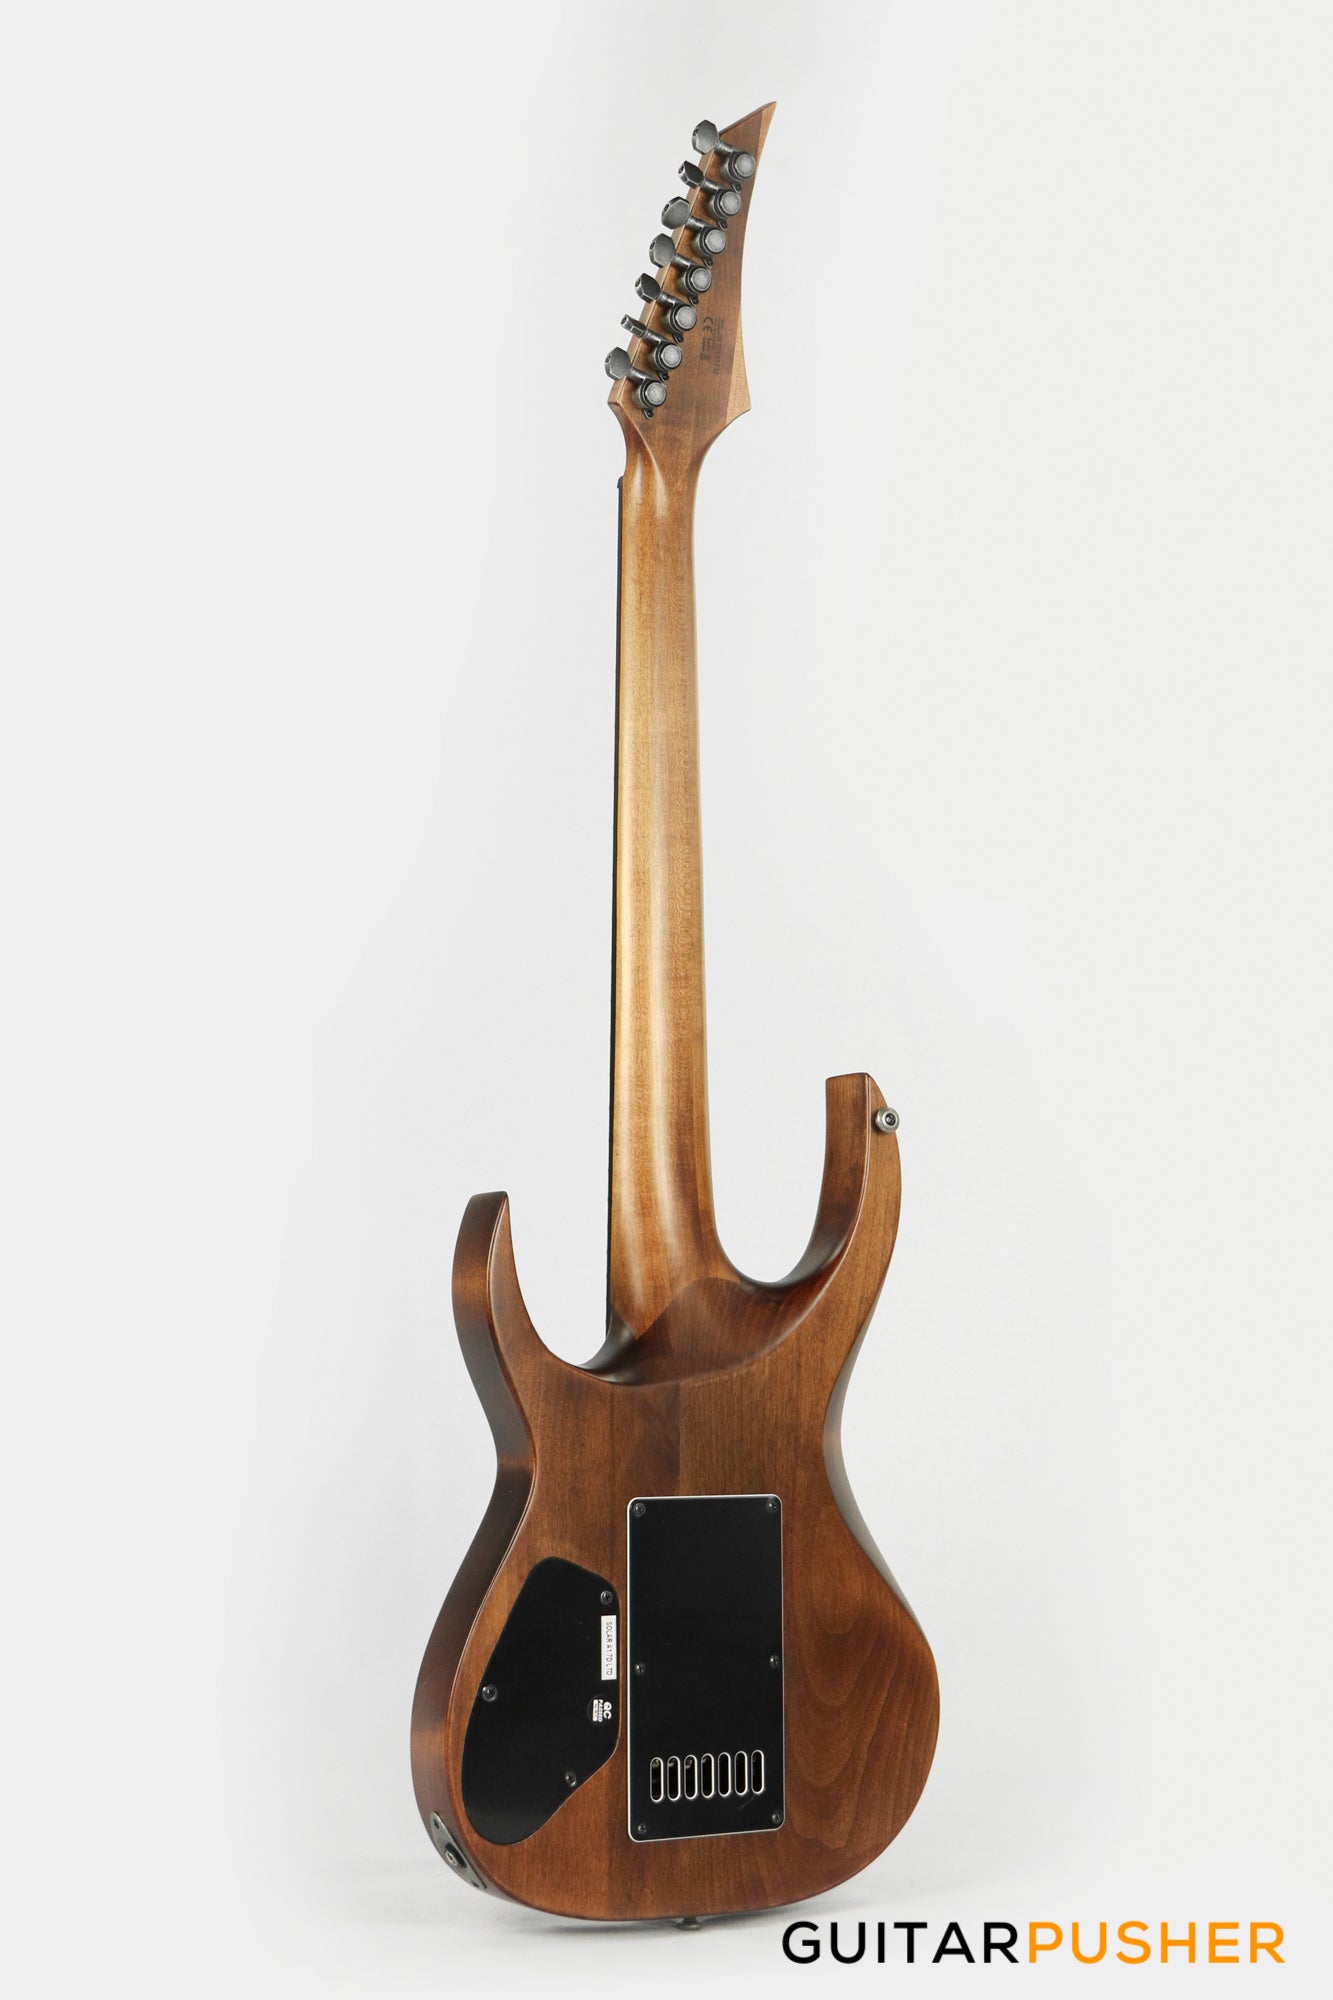 Solar Guitars A1.7D LTD Aged Natural Matte/Distressed 7-String Electric Guitar with Evertune Bridge